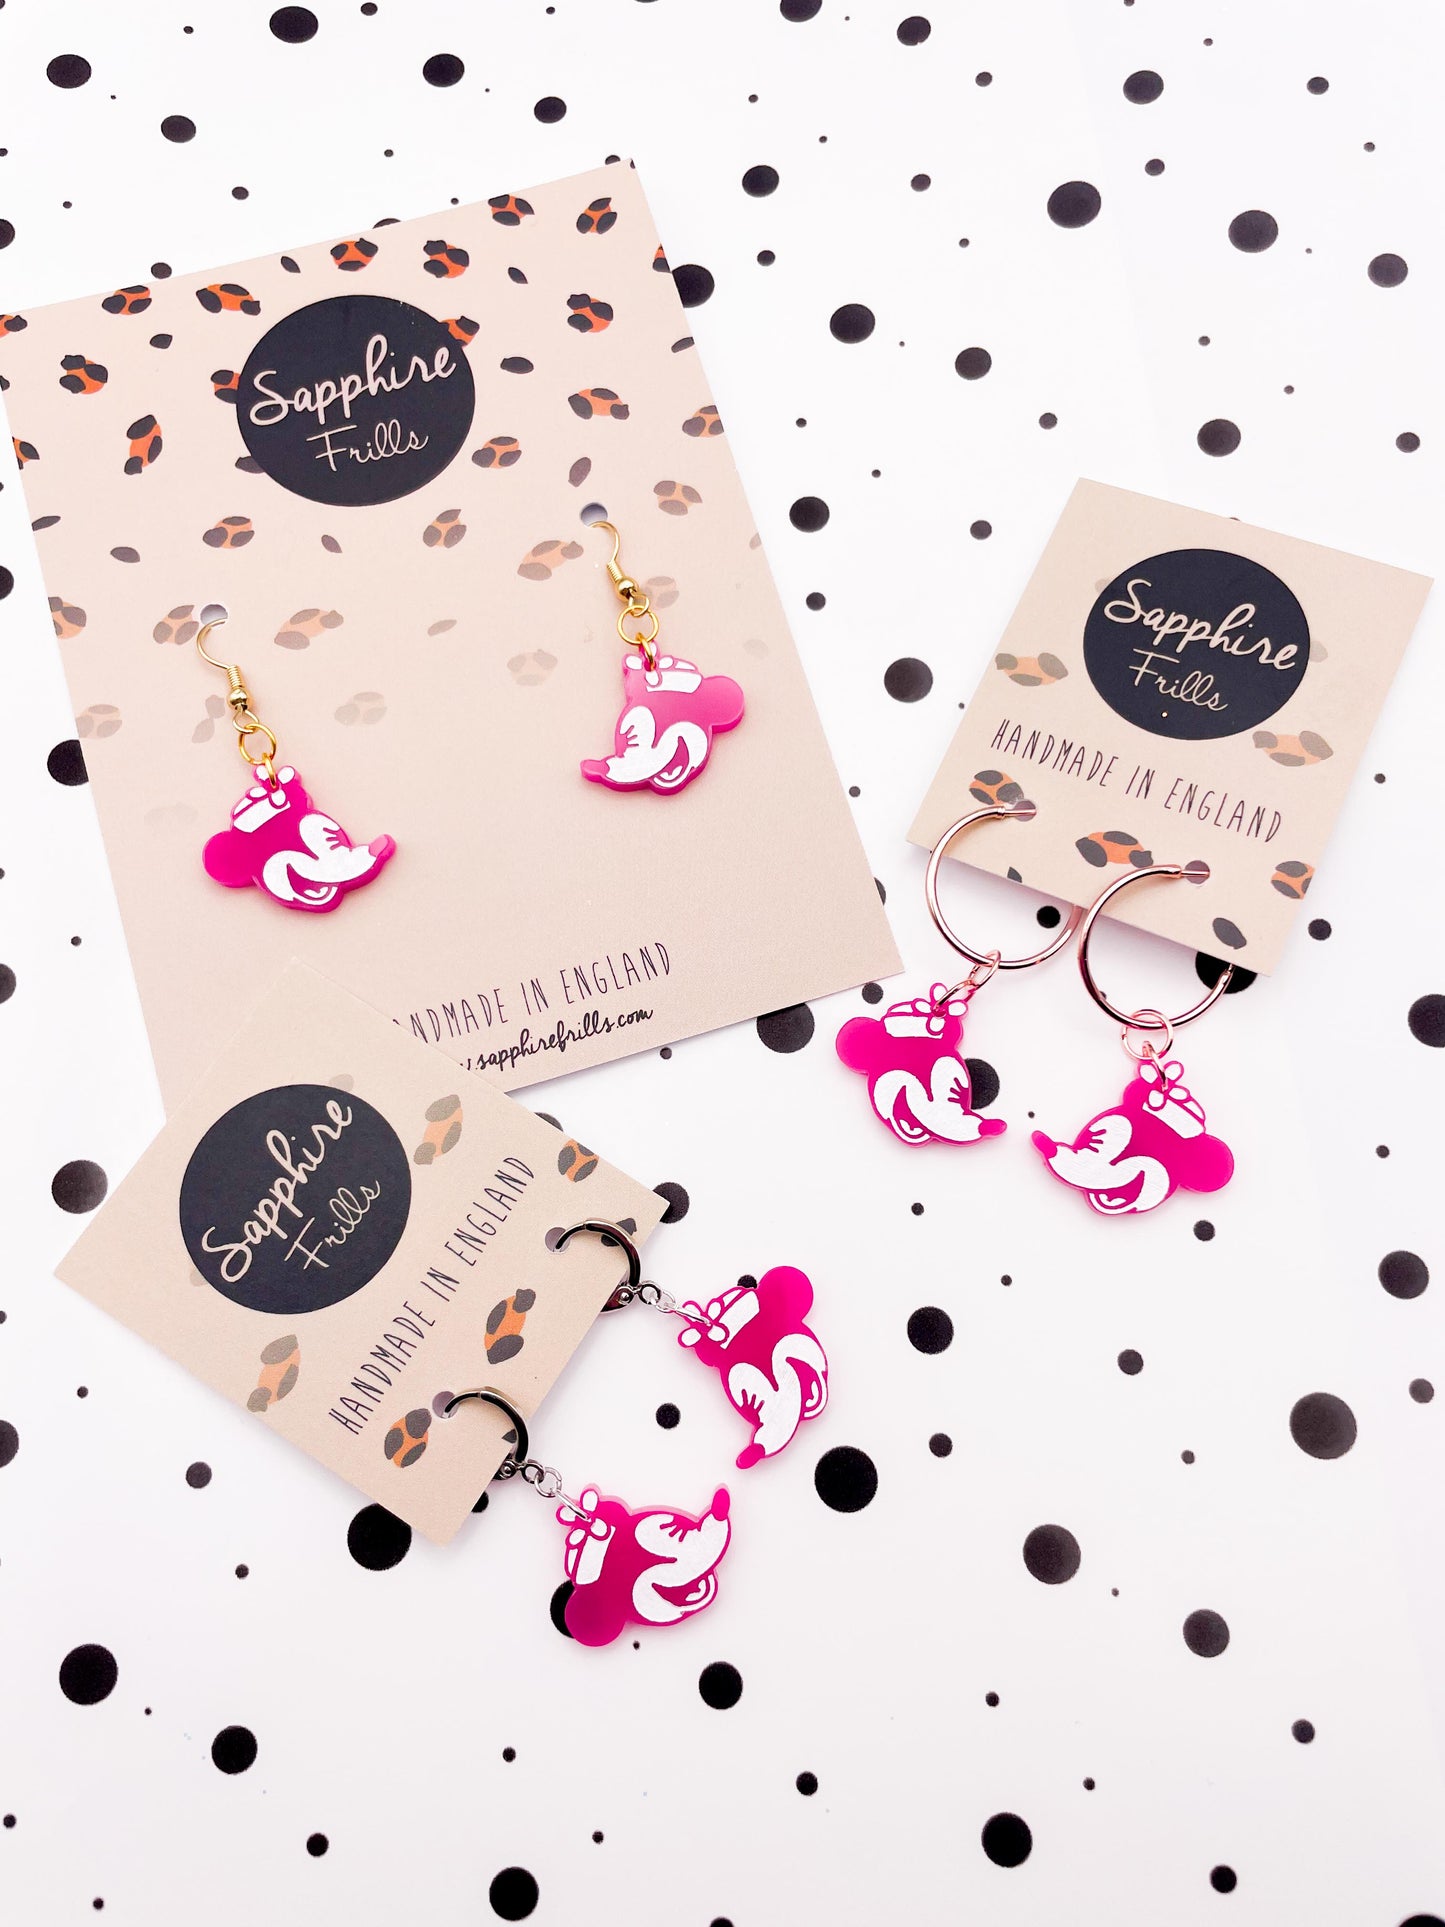 Medium Hot Pink Minnie Mouse Acrylic Dangle Earrings